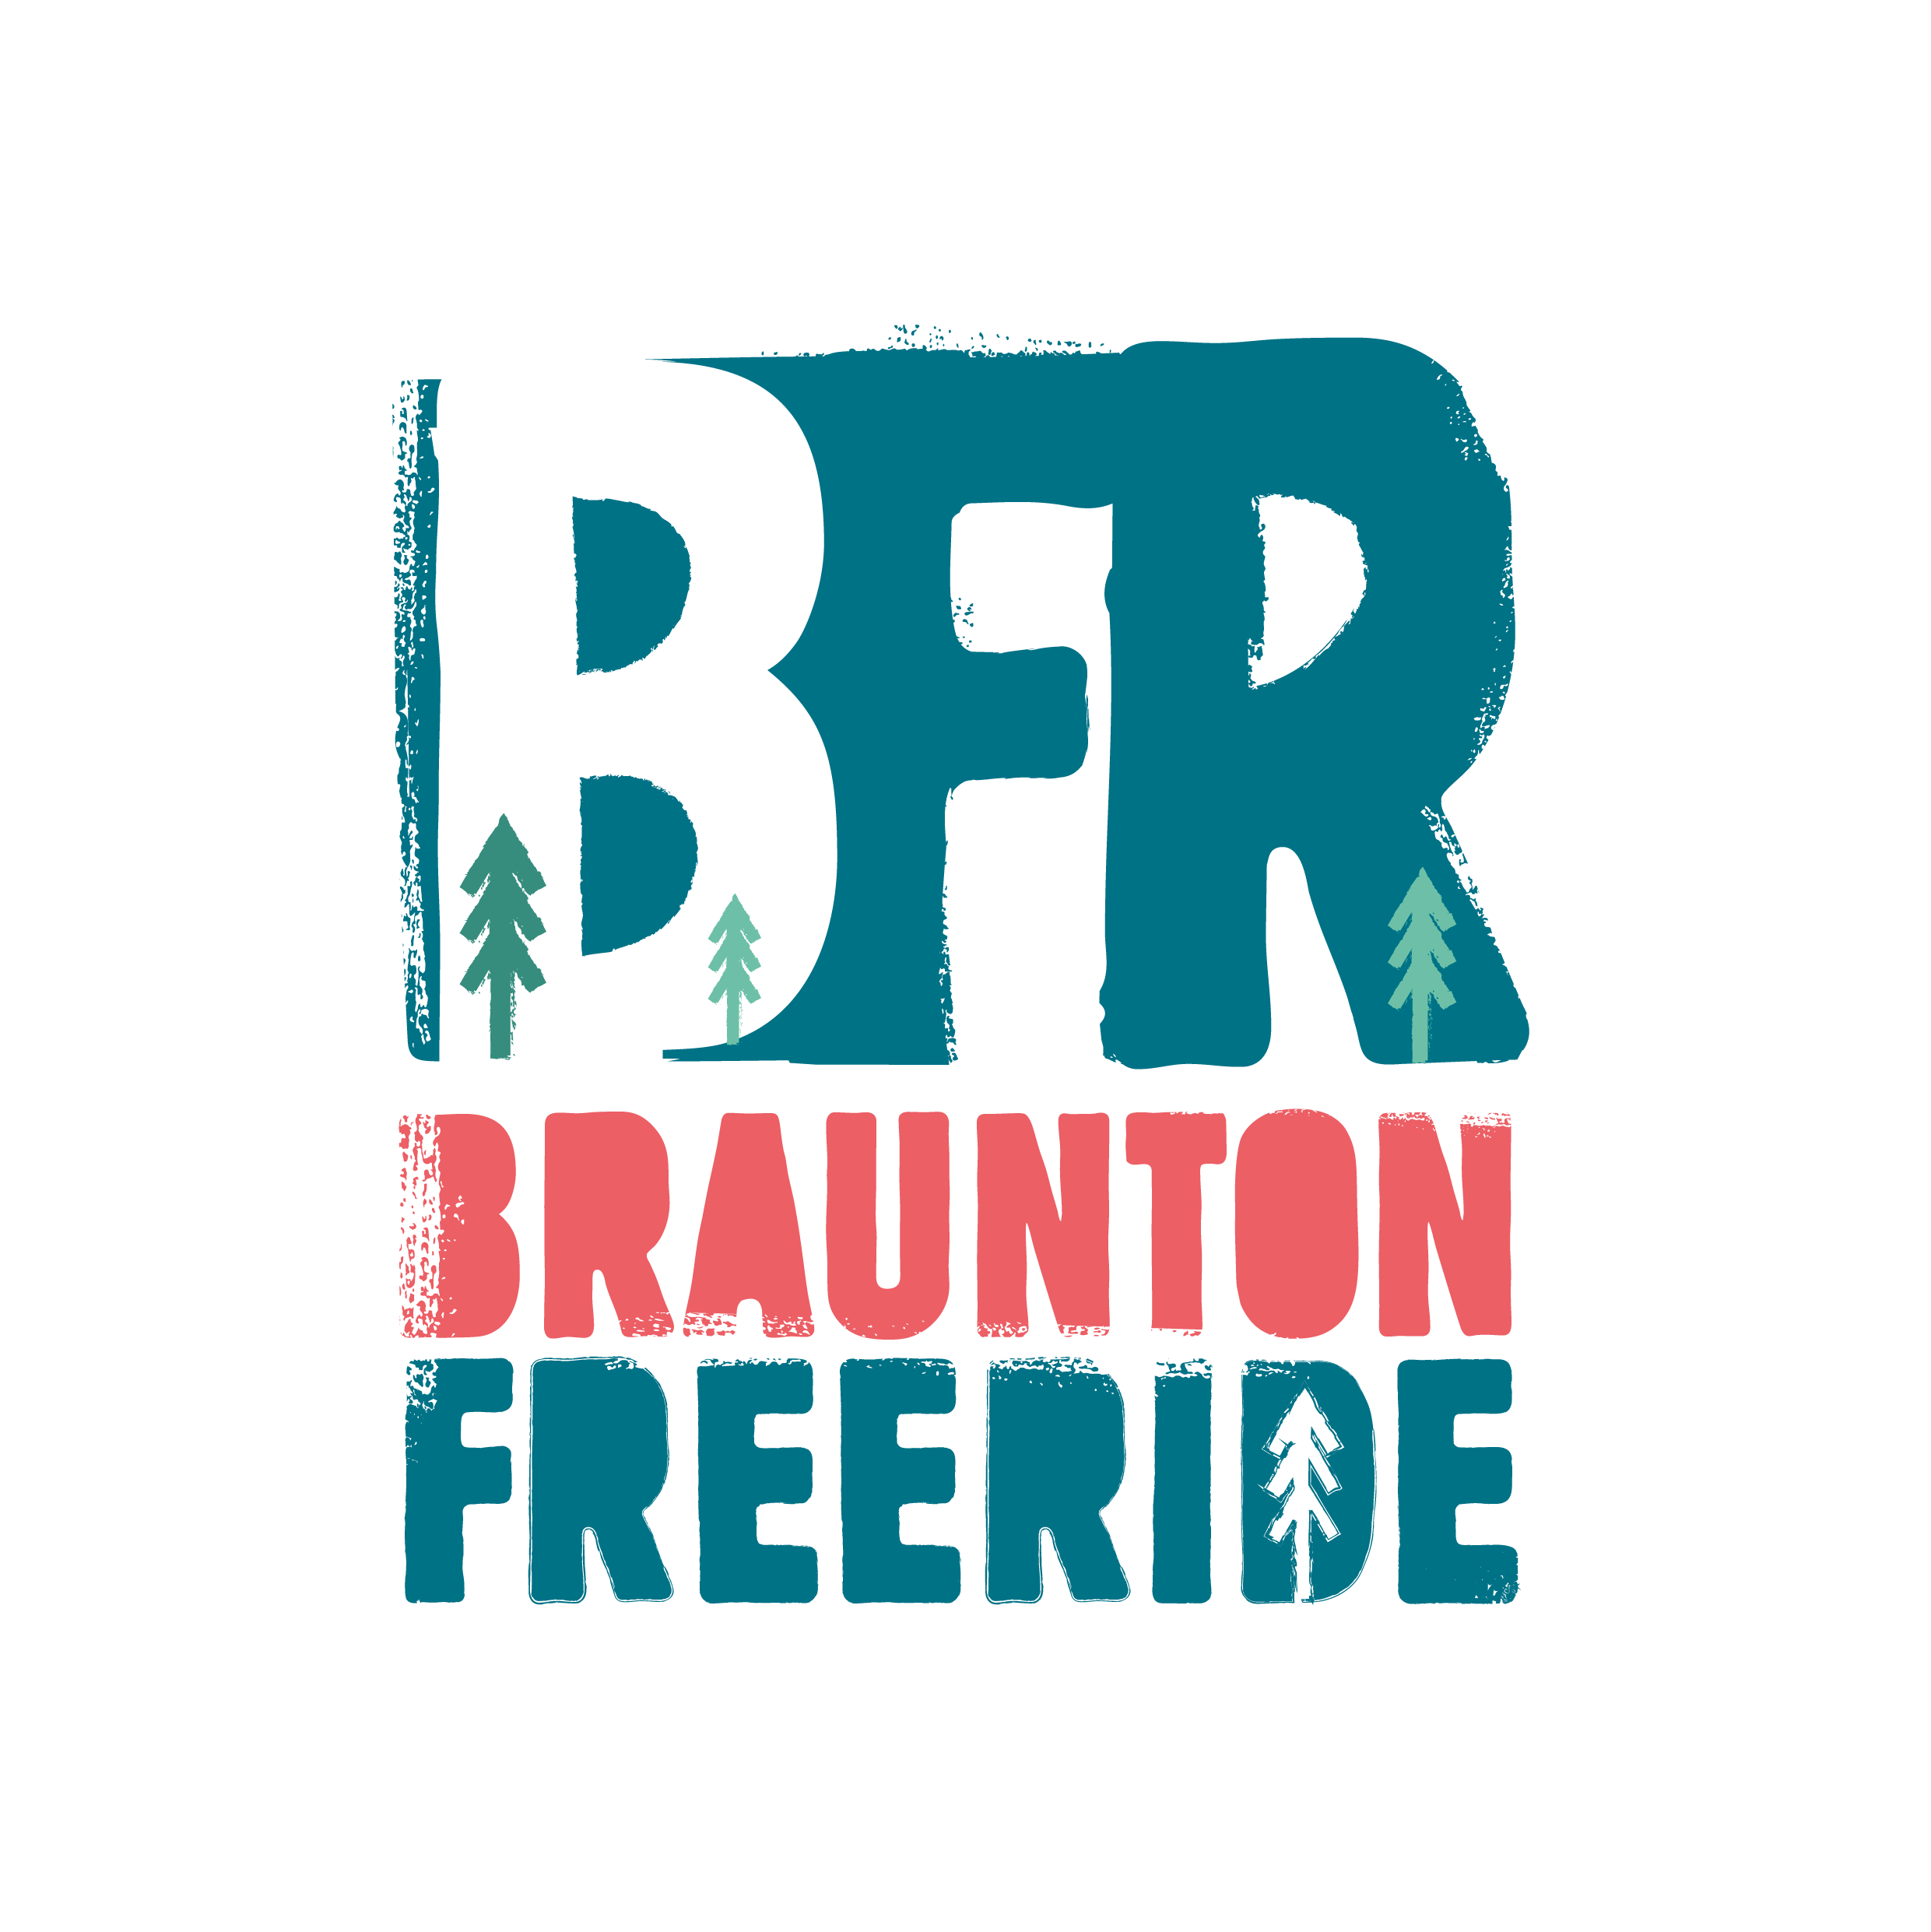 Braunton Freeride